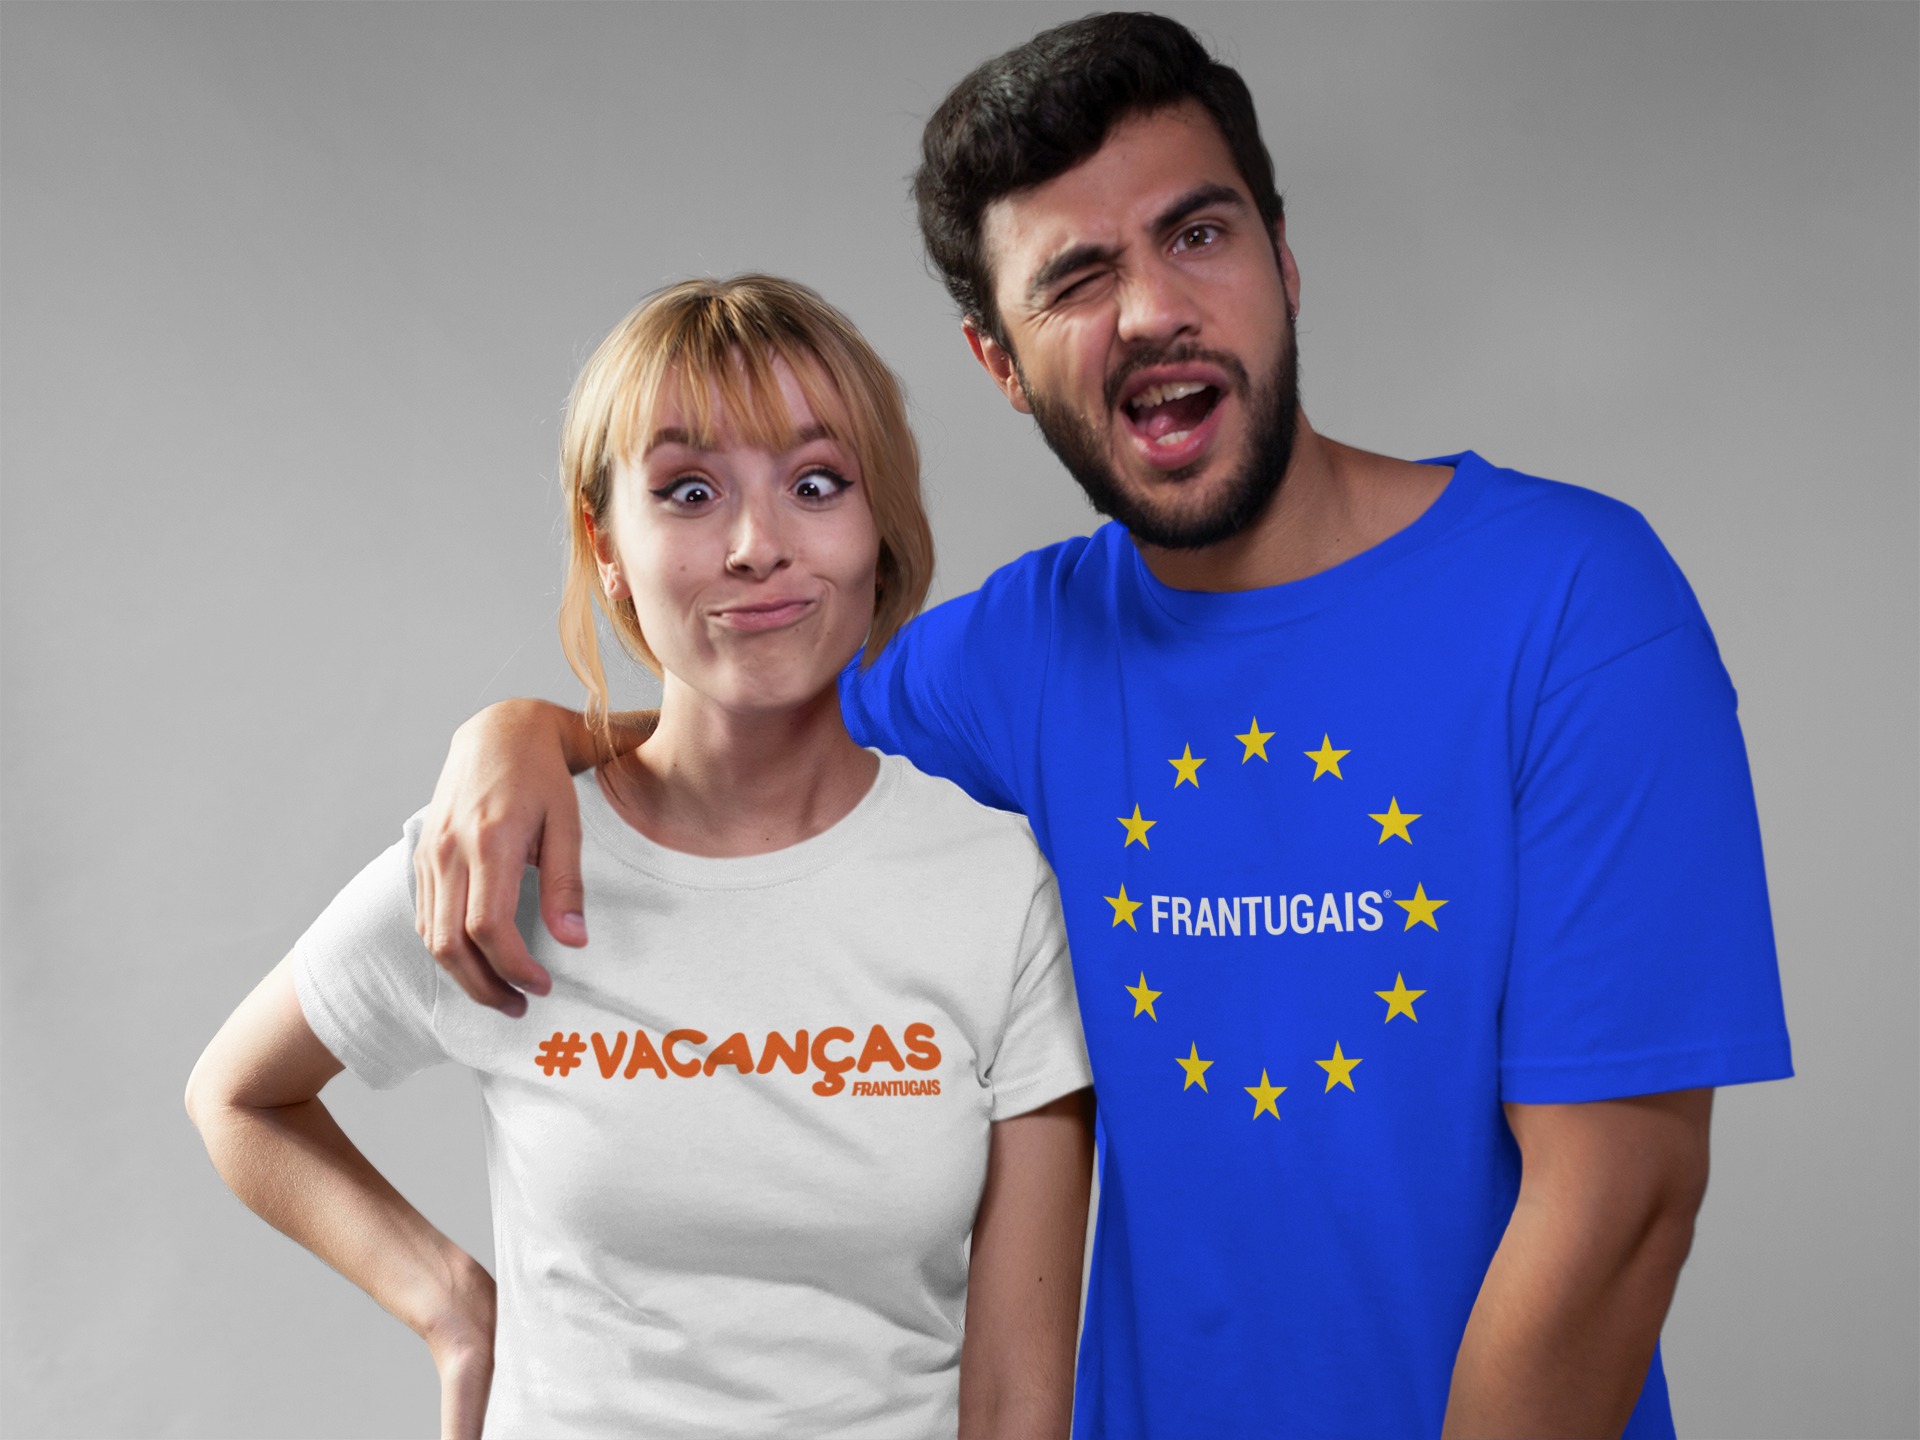 T-shirts Vacancas et Frantugais europe